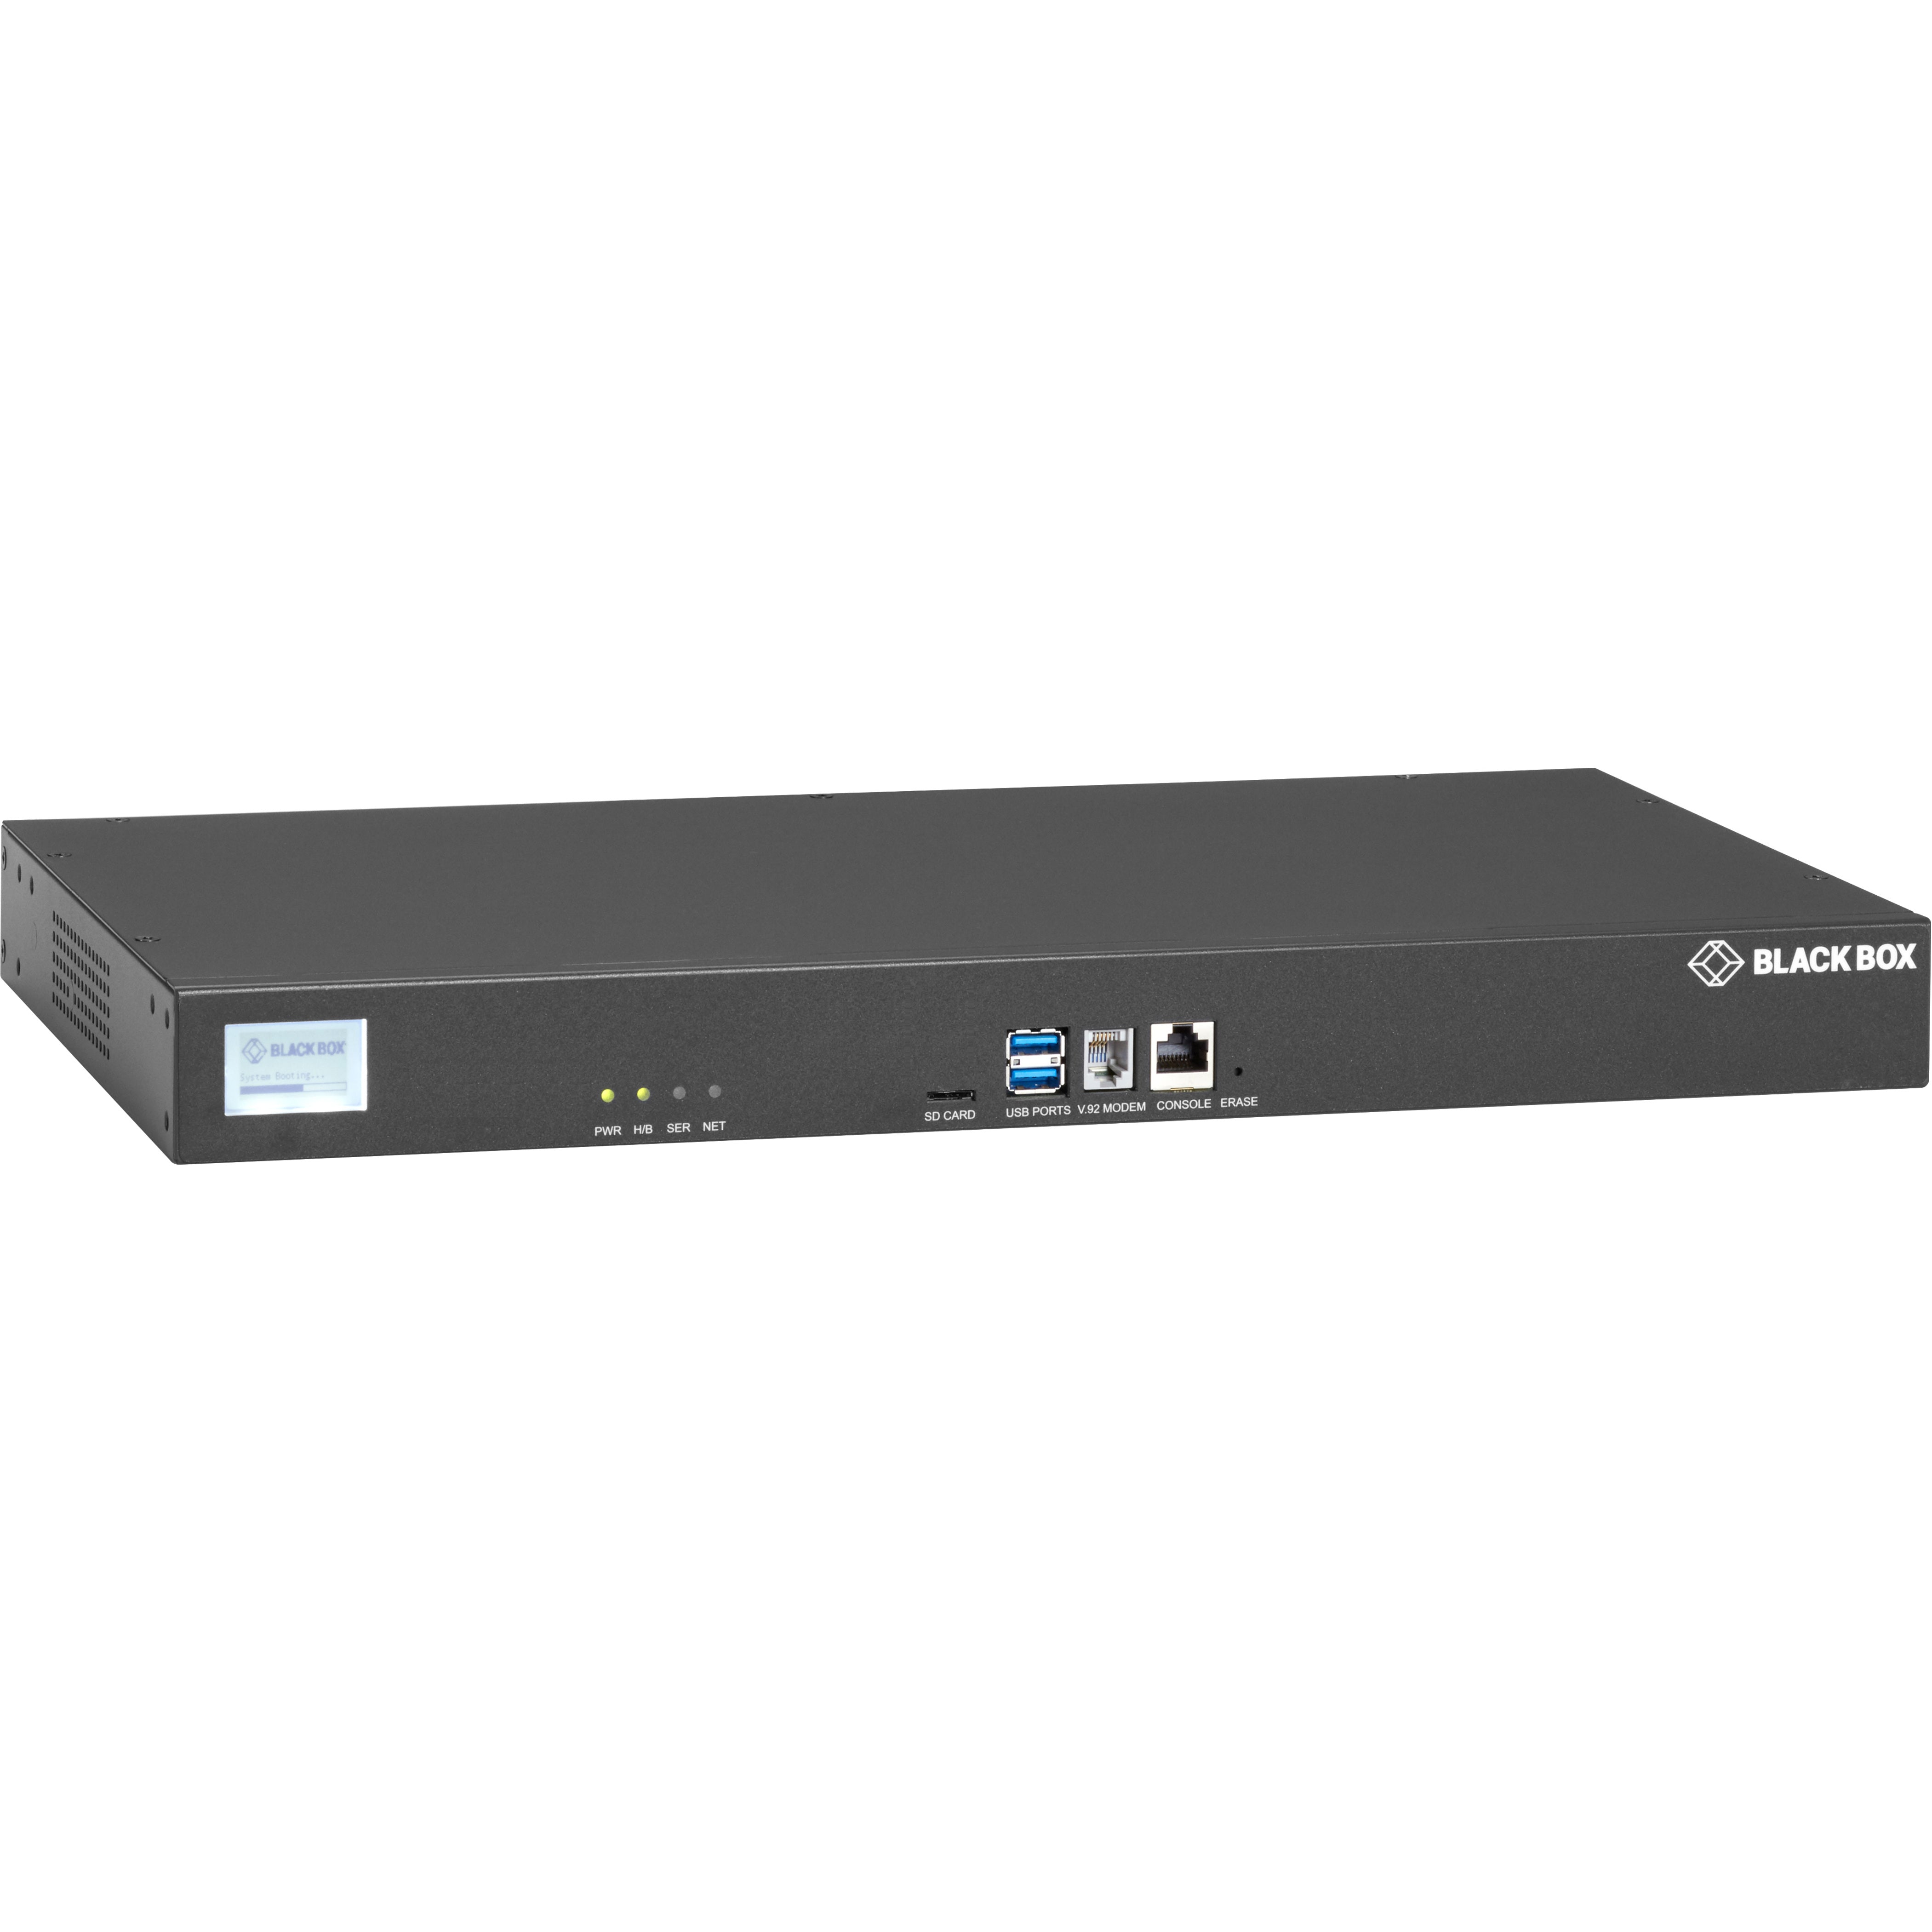 Black Box LES1748A-R2 LES1700 Series Console Server - POTS Modem, Dual 10/100/1000, 48-Port